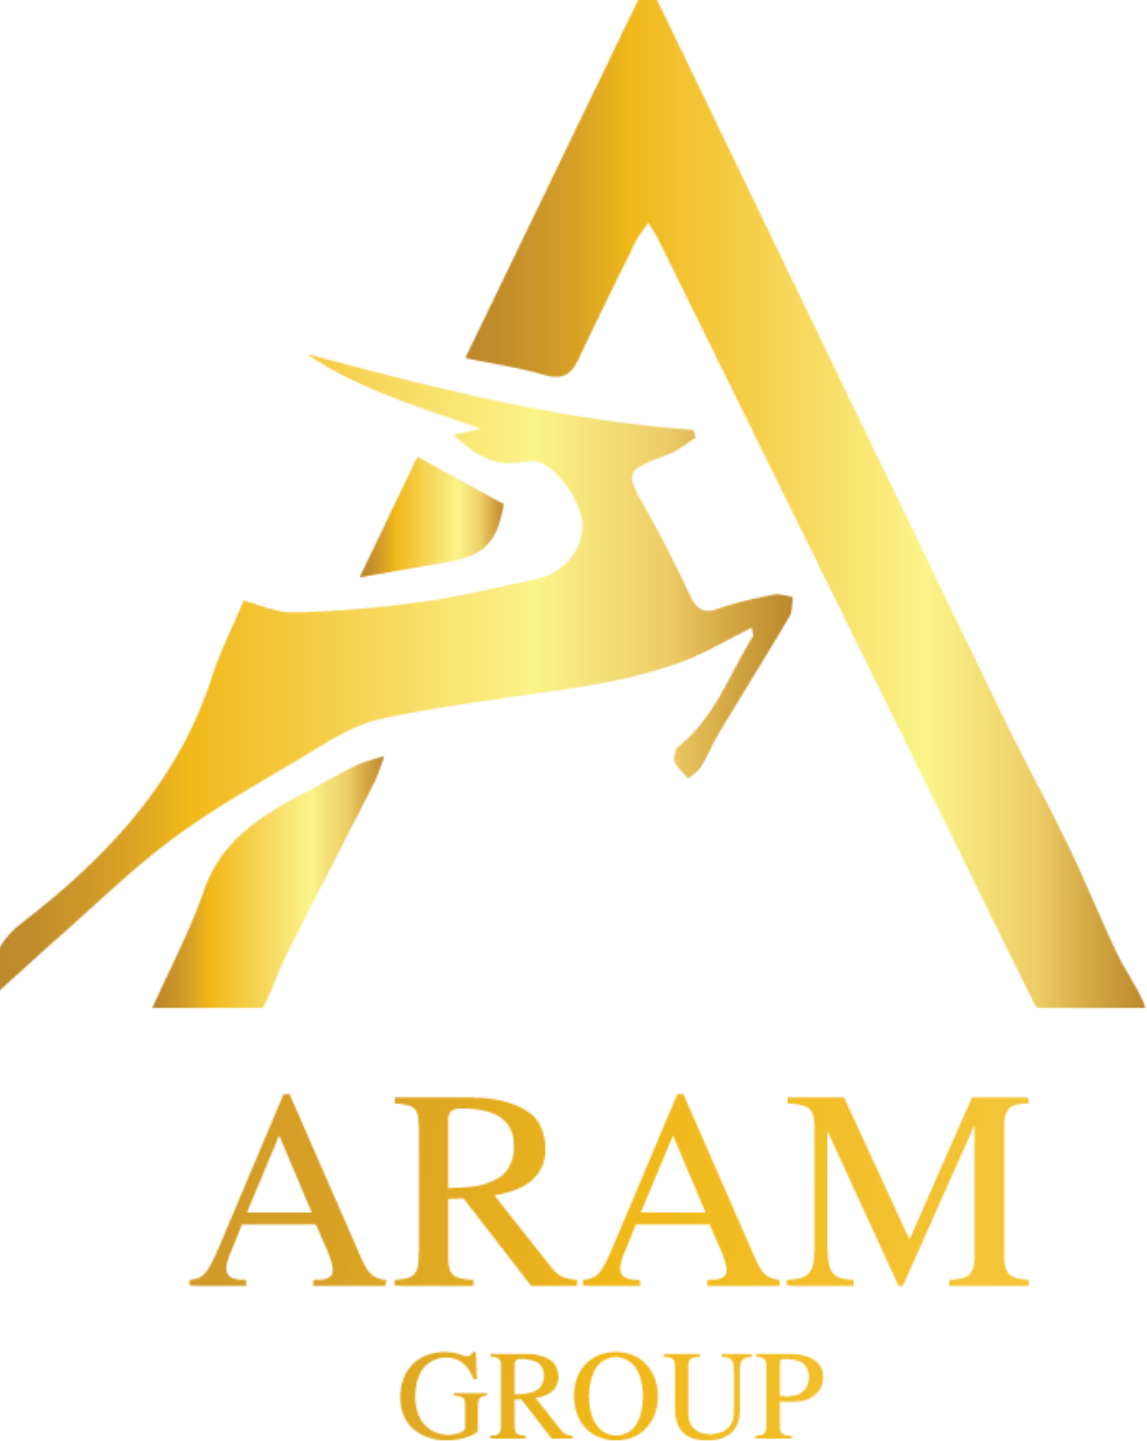 Aram Group logo large (transparent PNG)